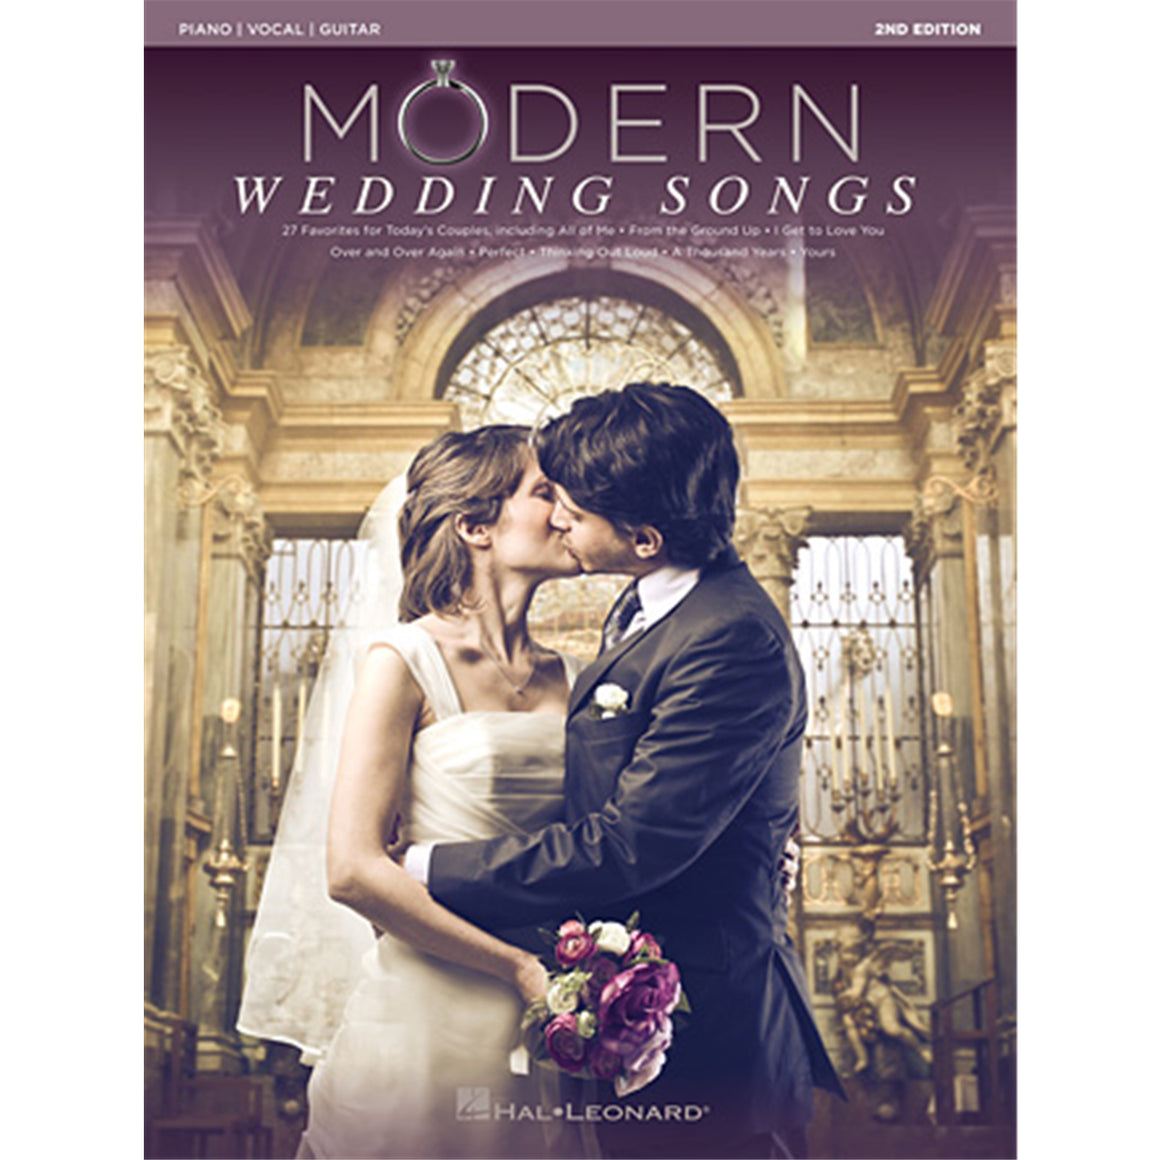 HAL LEONARD 254368 Modern Wedding Songs - 2nd Edition